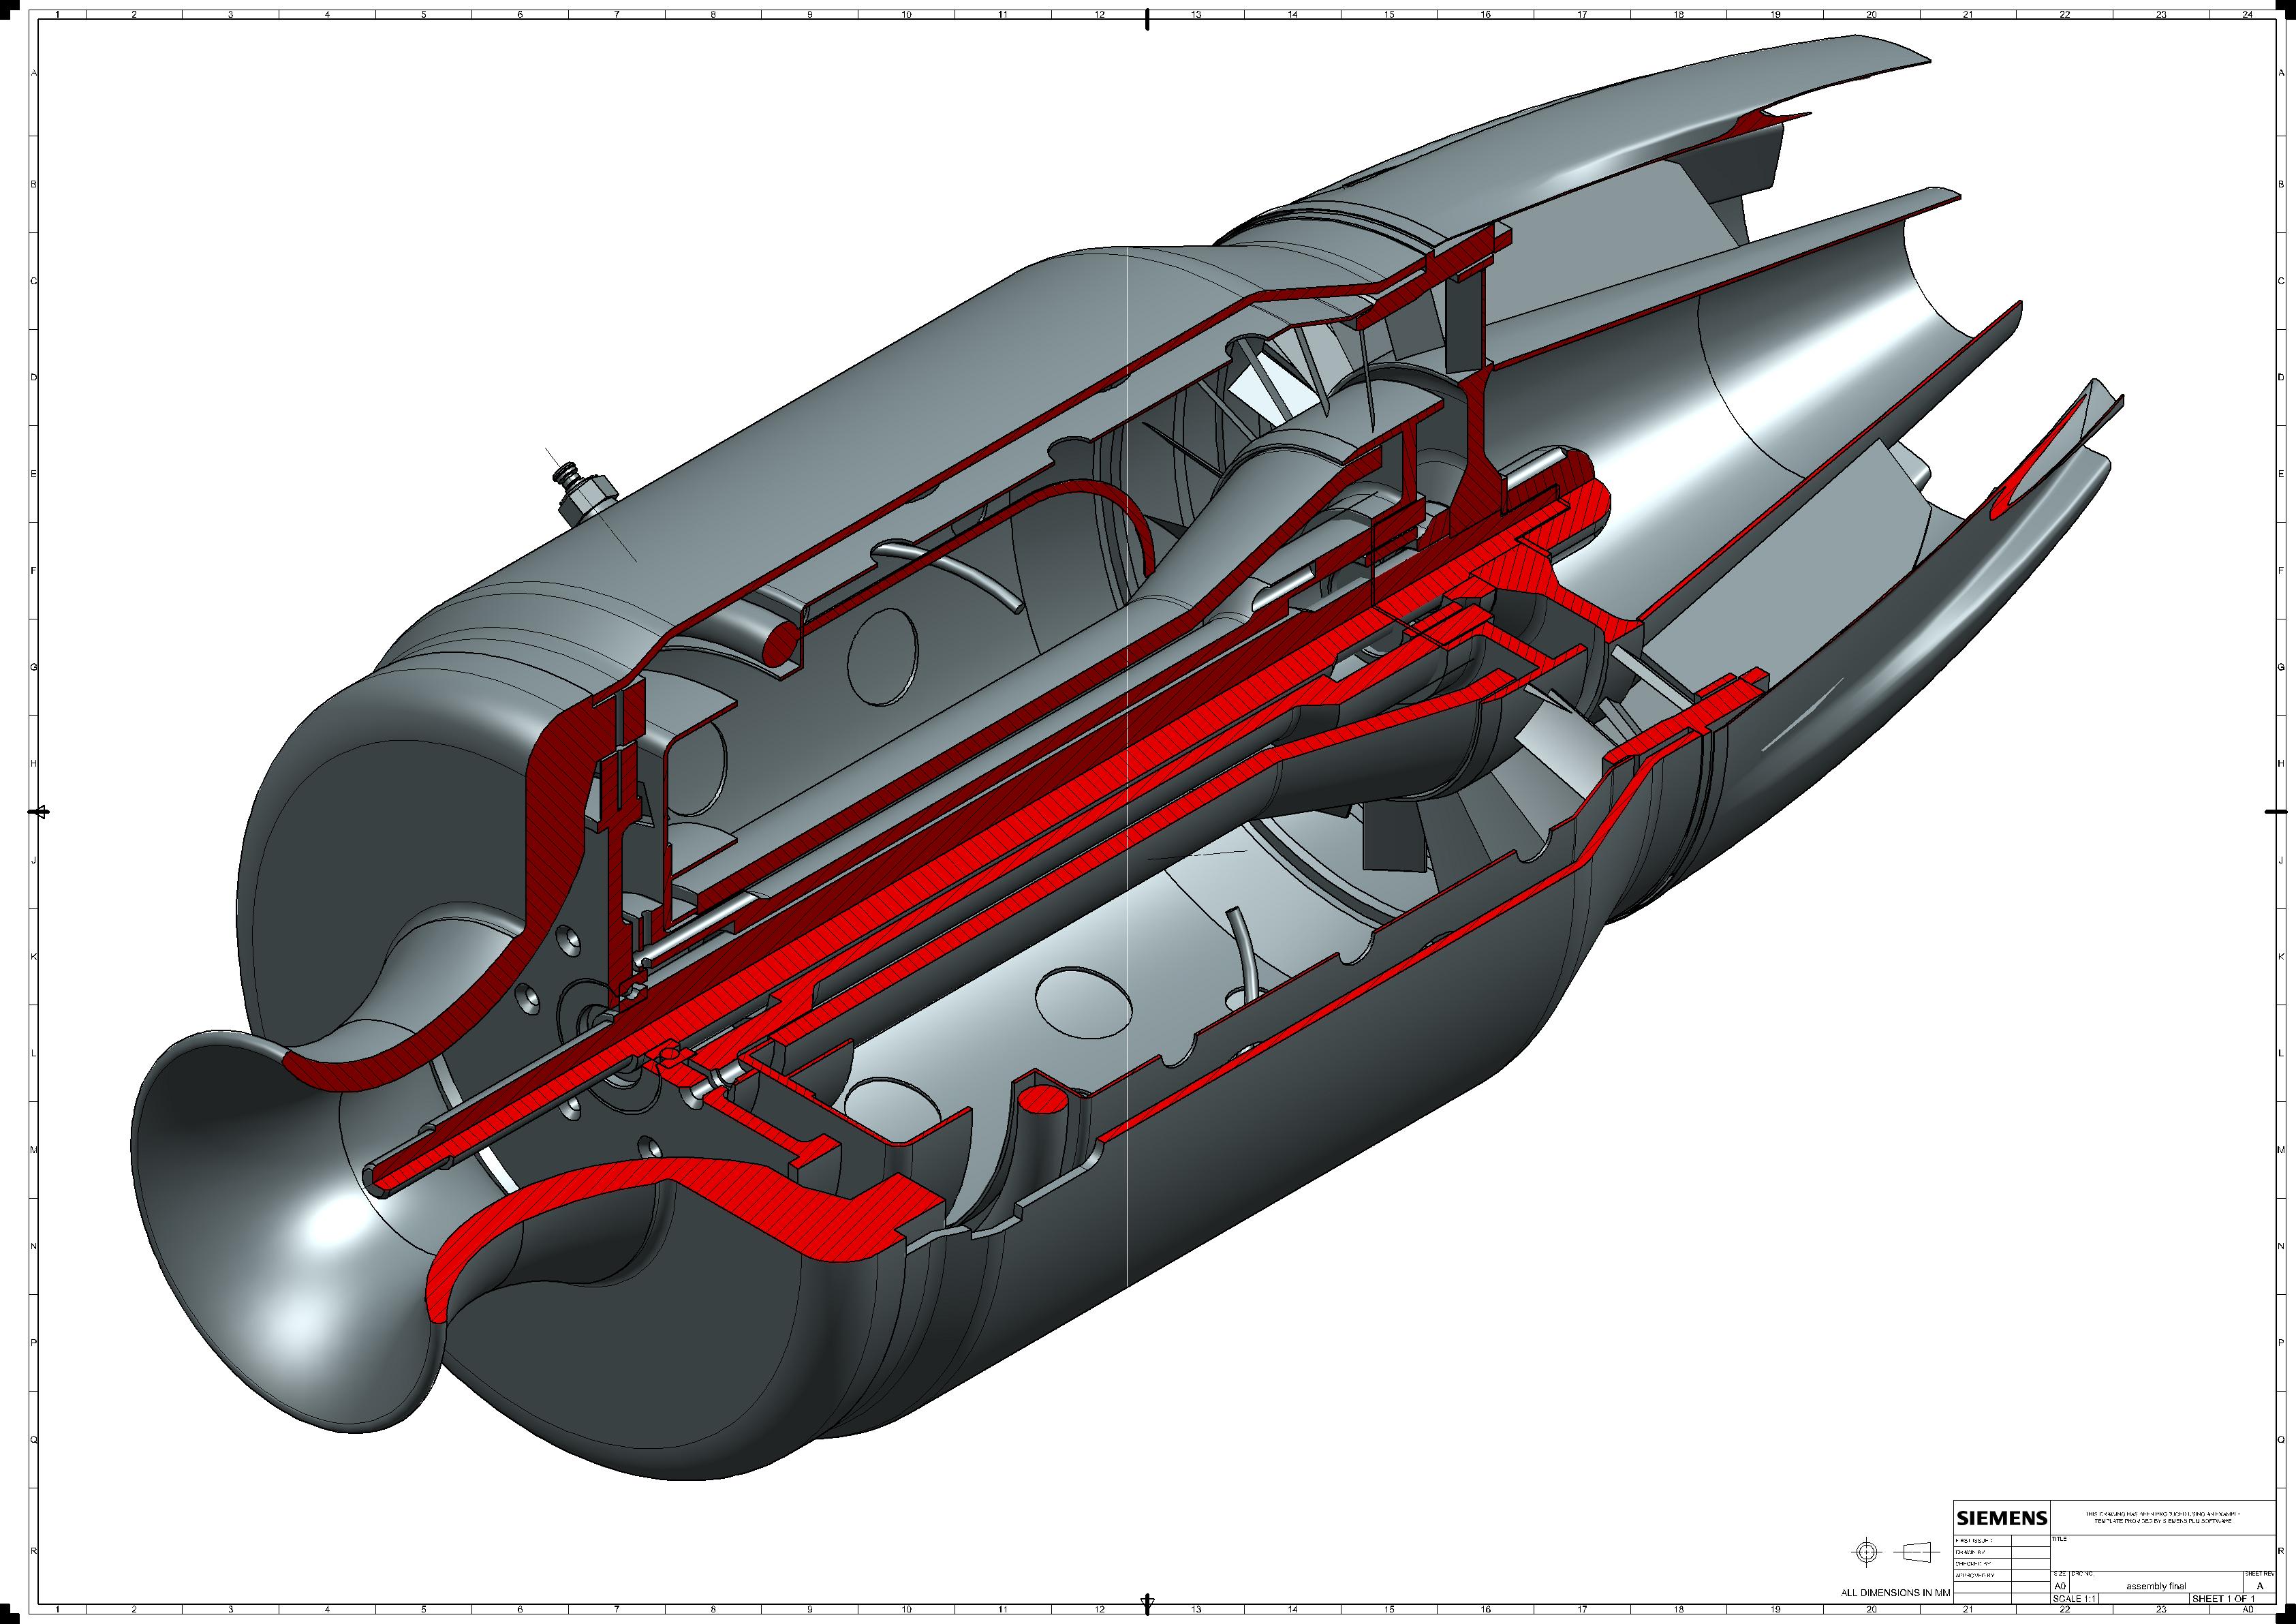 3D Solid Modeling Services for jet engine parts